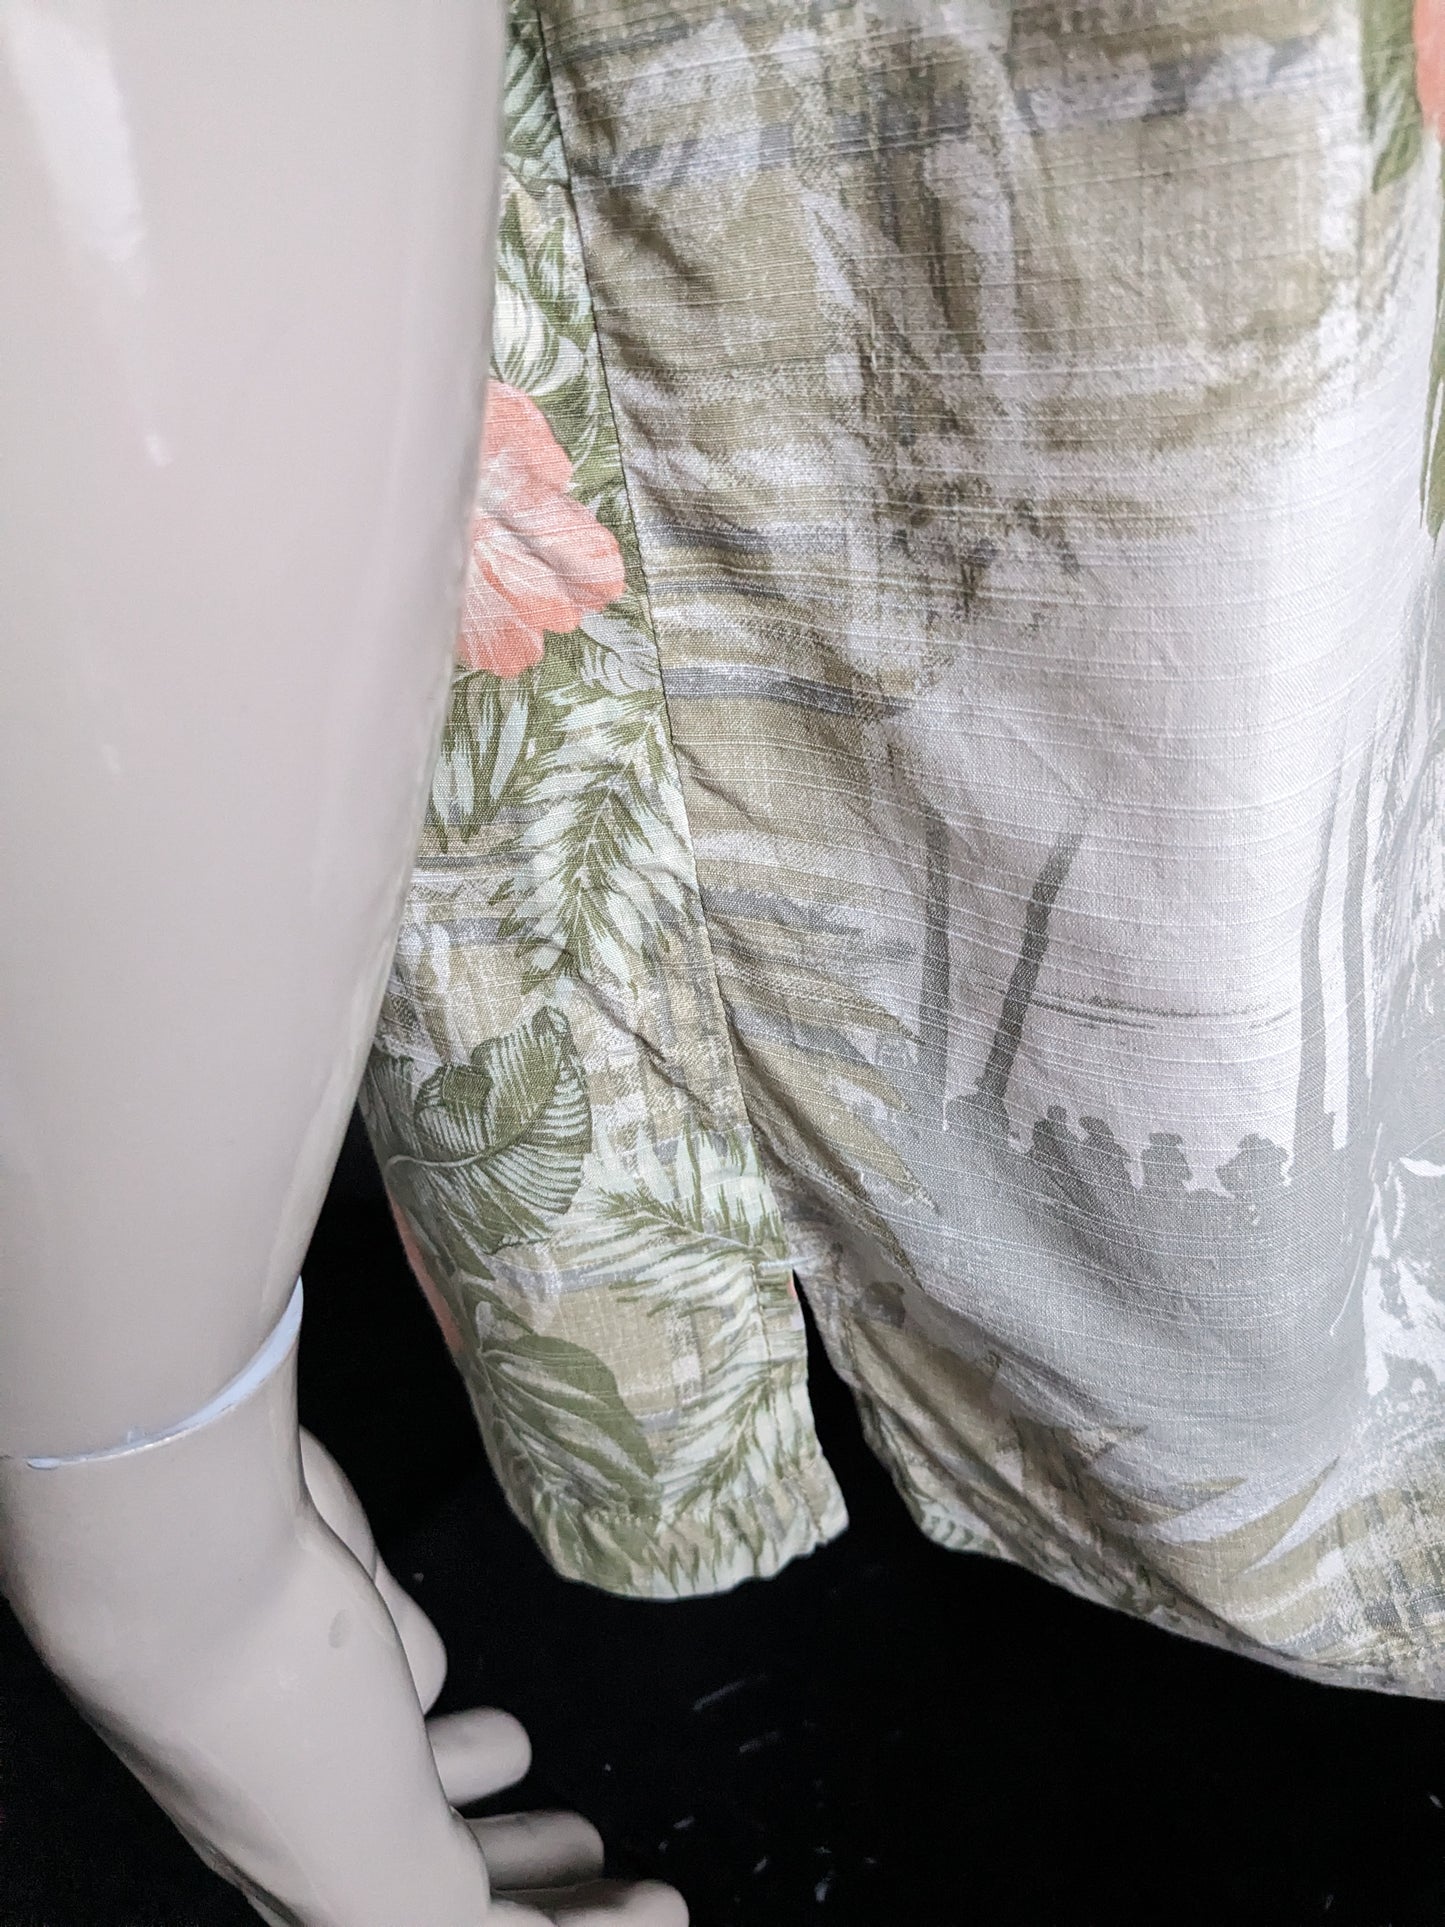 Original silk tommy bahama hawaii shirt short sleeve. Green beige pink print. Size XL / XXL. 90% silk.